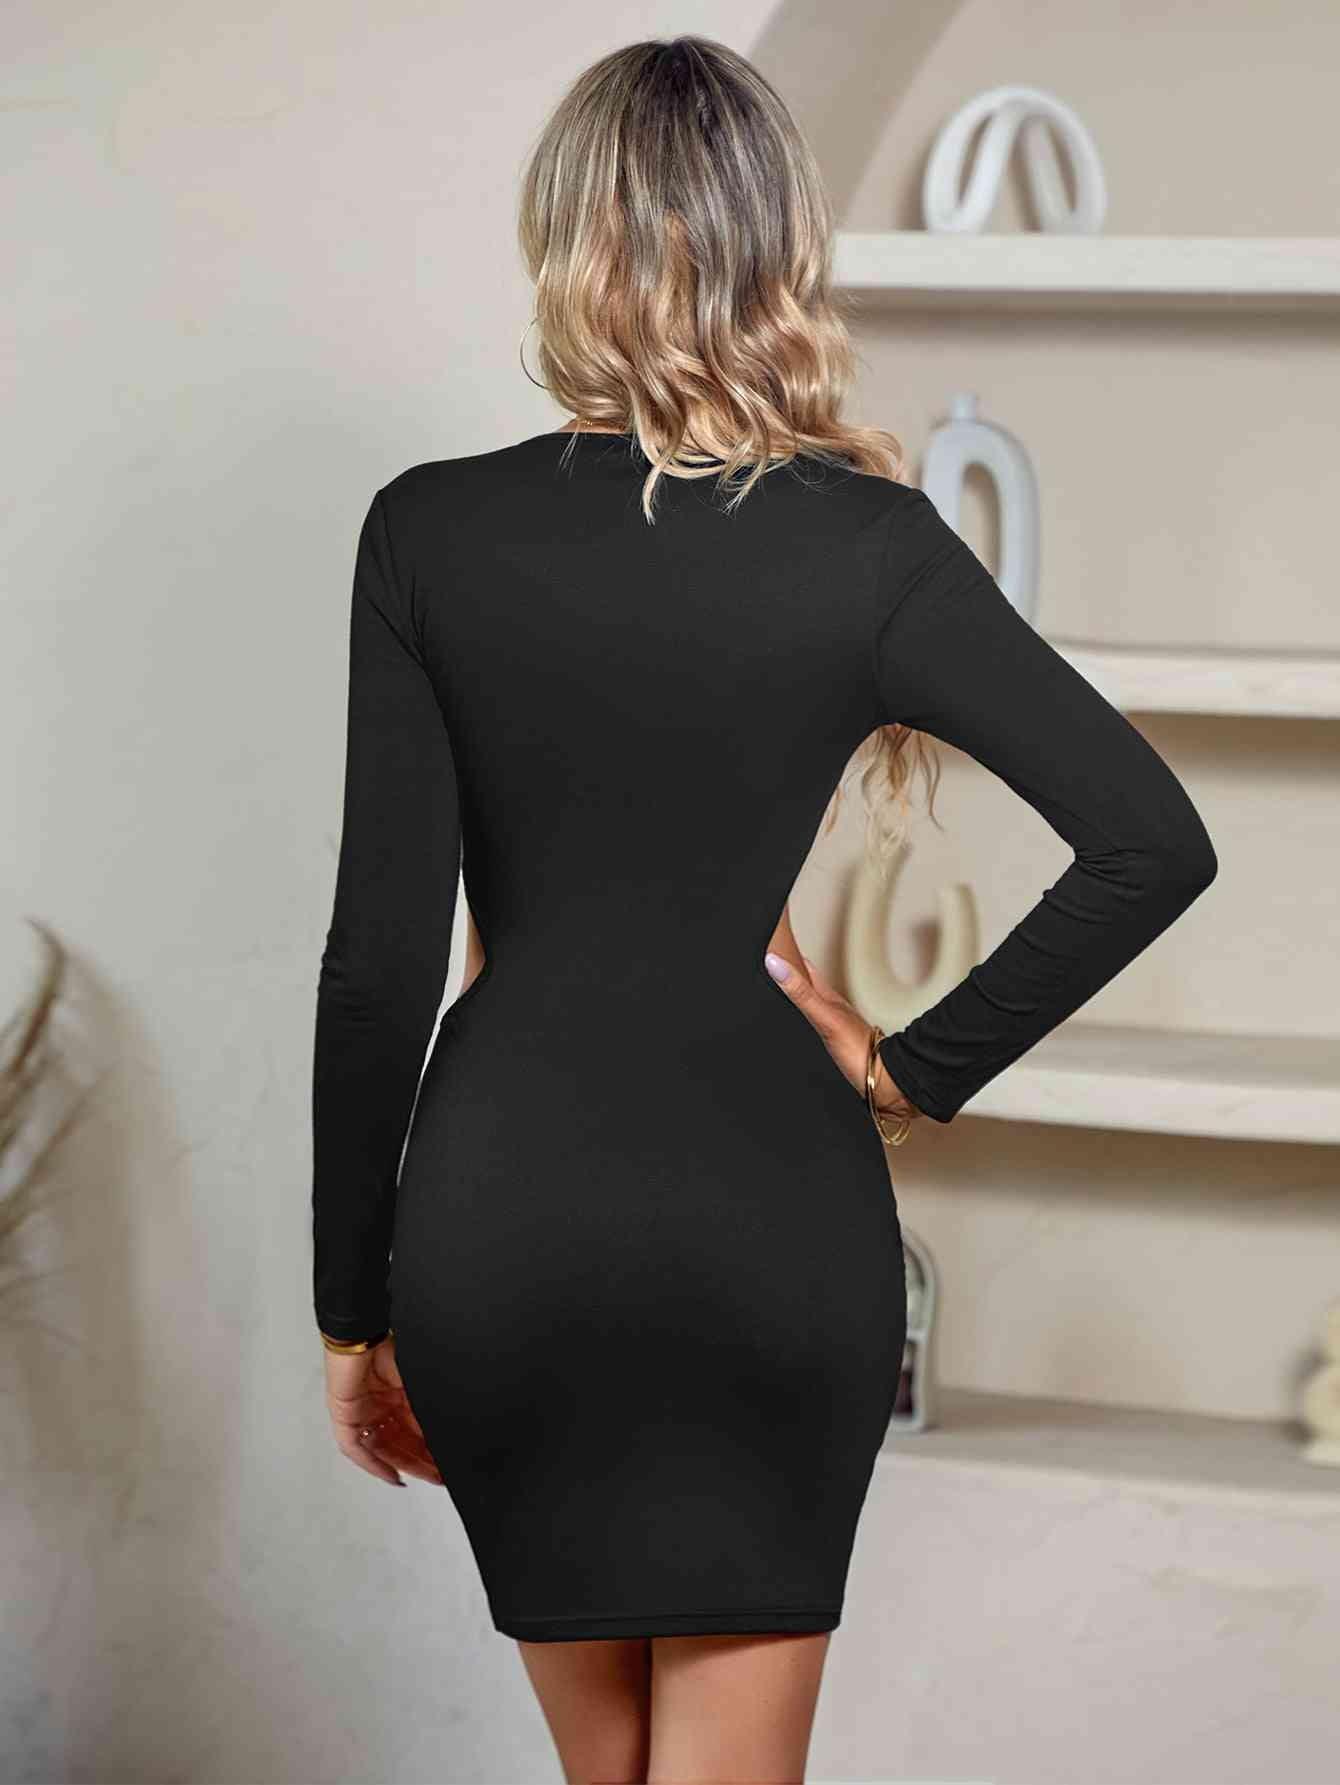 Bona Fide Fashion - Cutout Twisted Front Plunge Neck Mini Dress - Women Fashion - Bona Fide Fashion